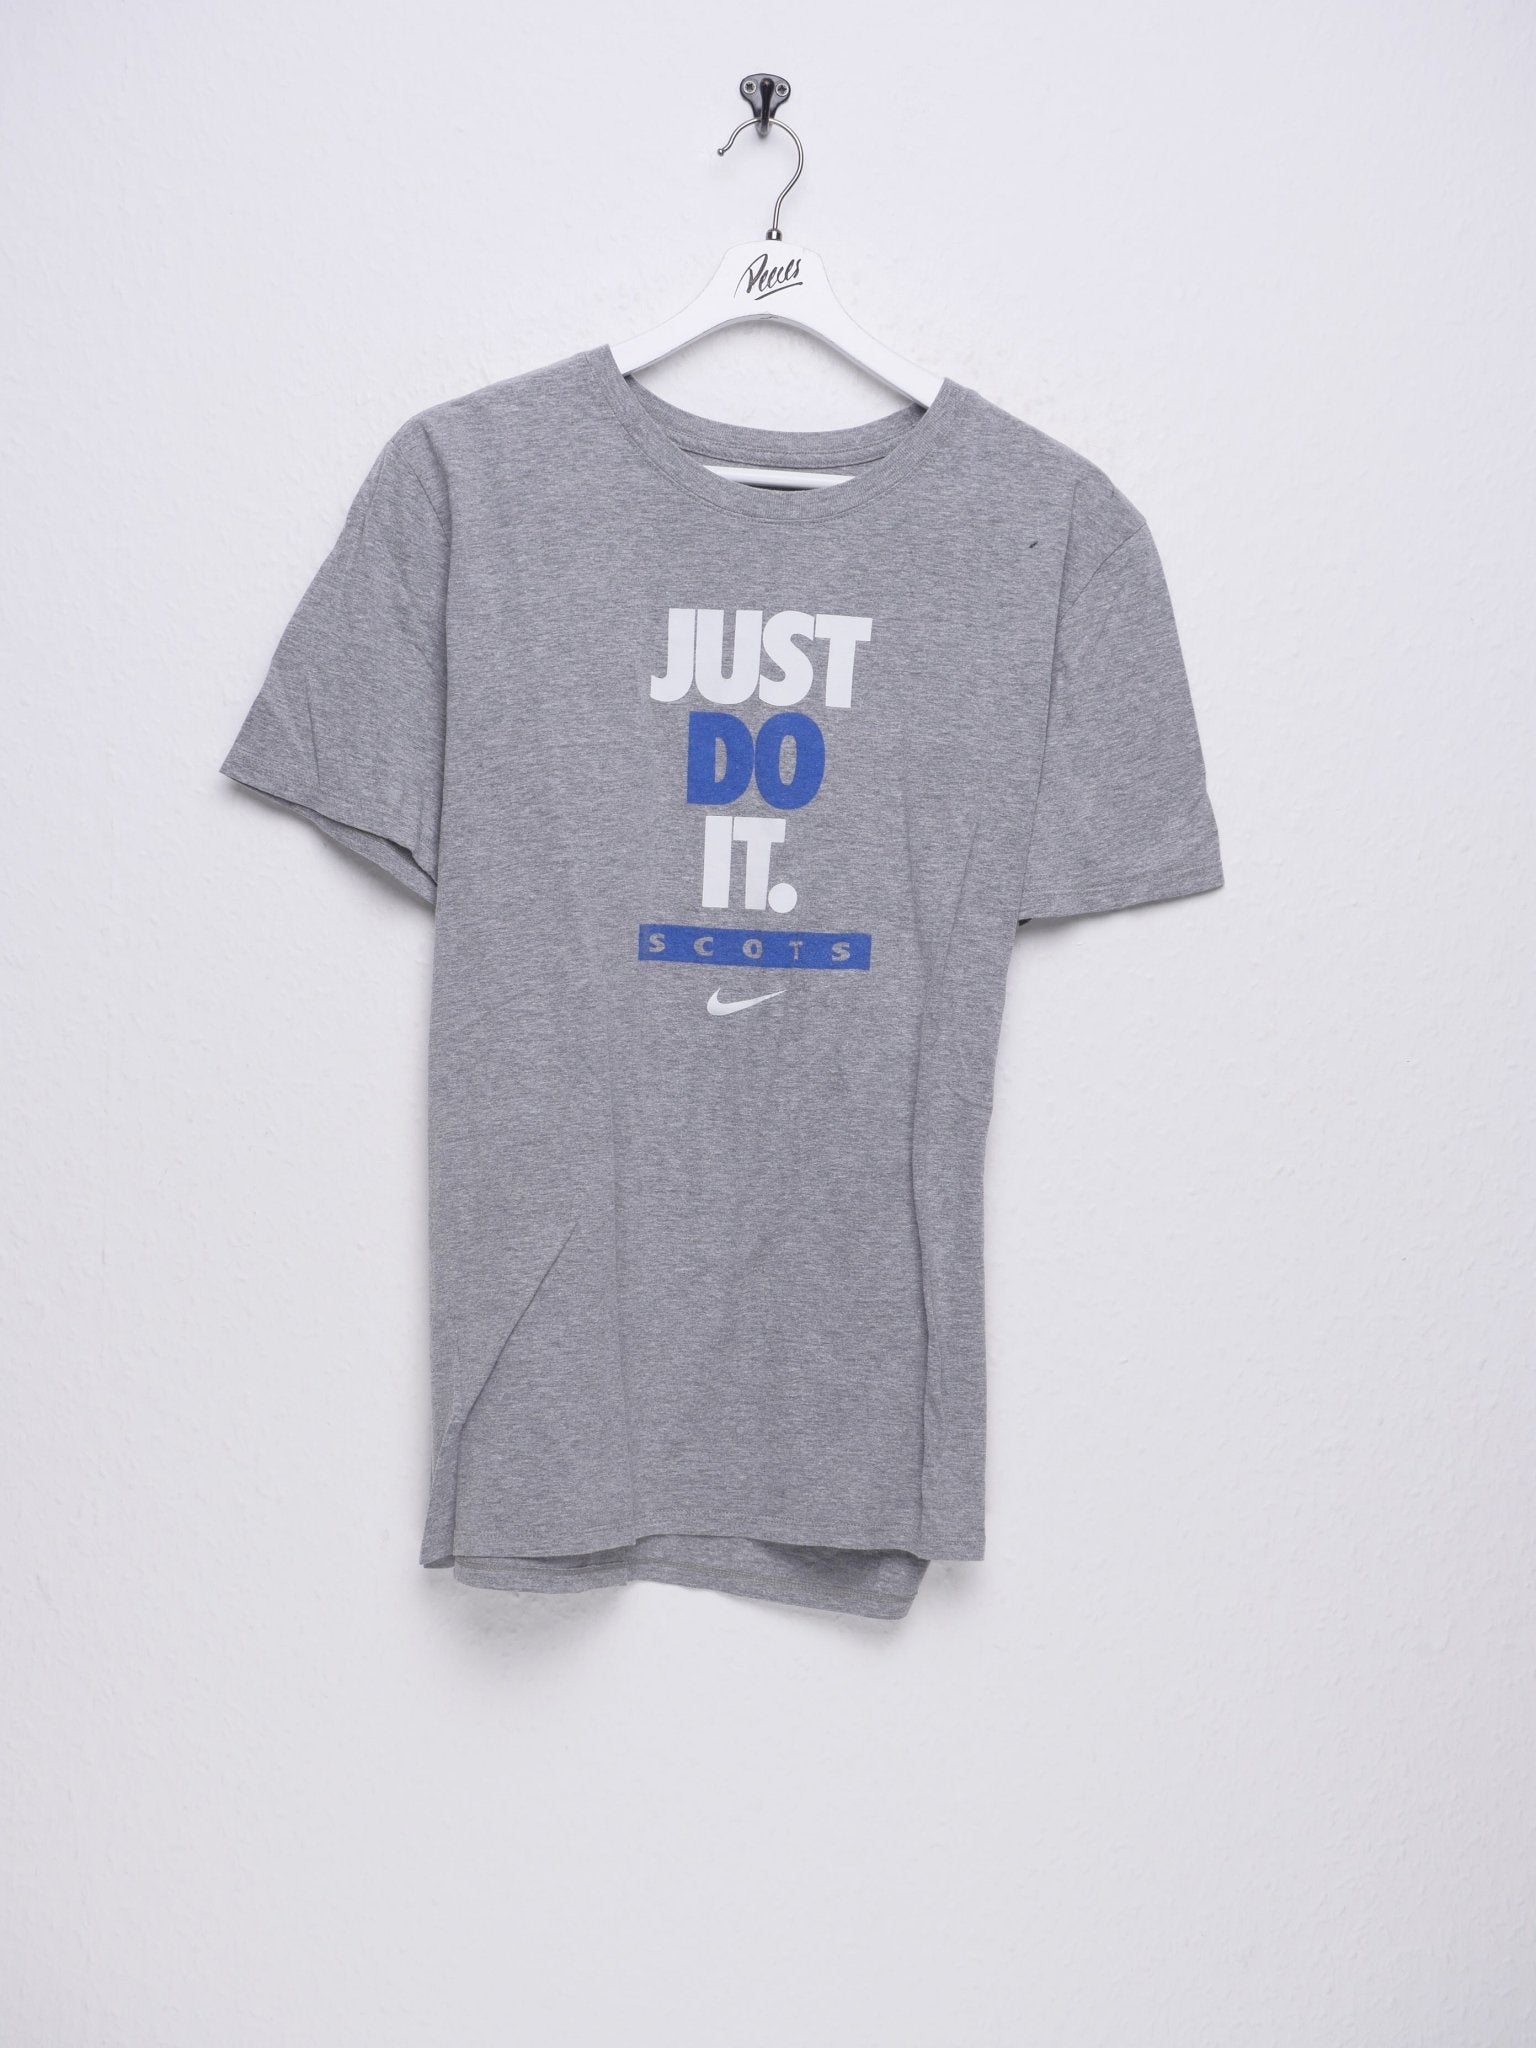 Nike printed Middle Swoosh grey Shirt - Peeces